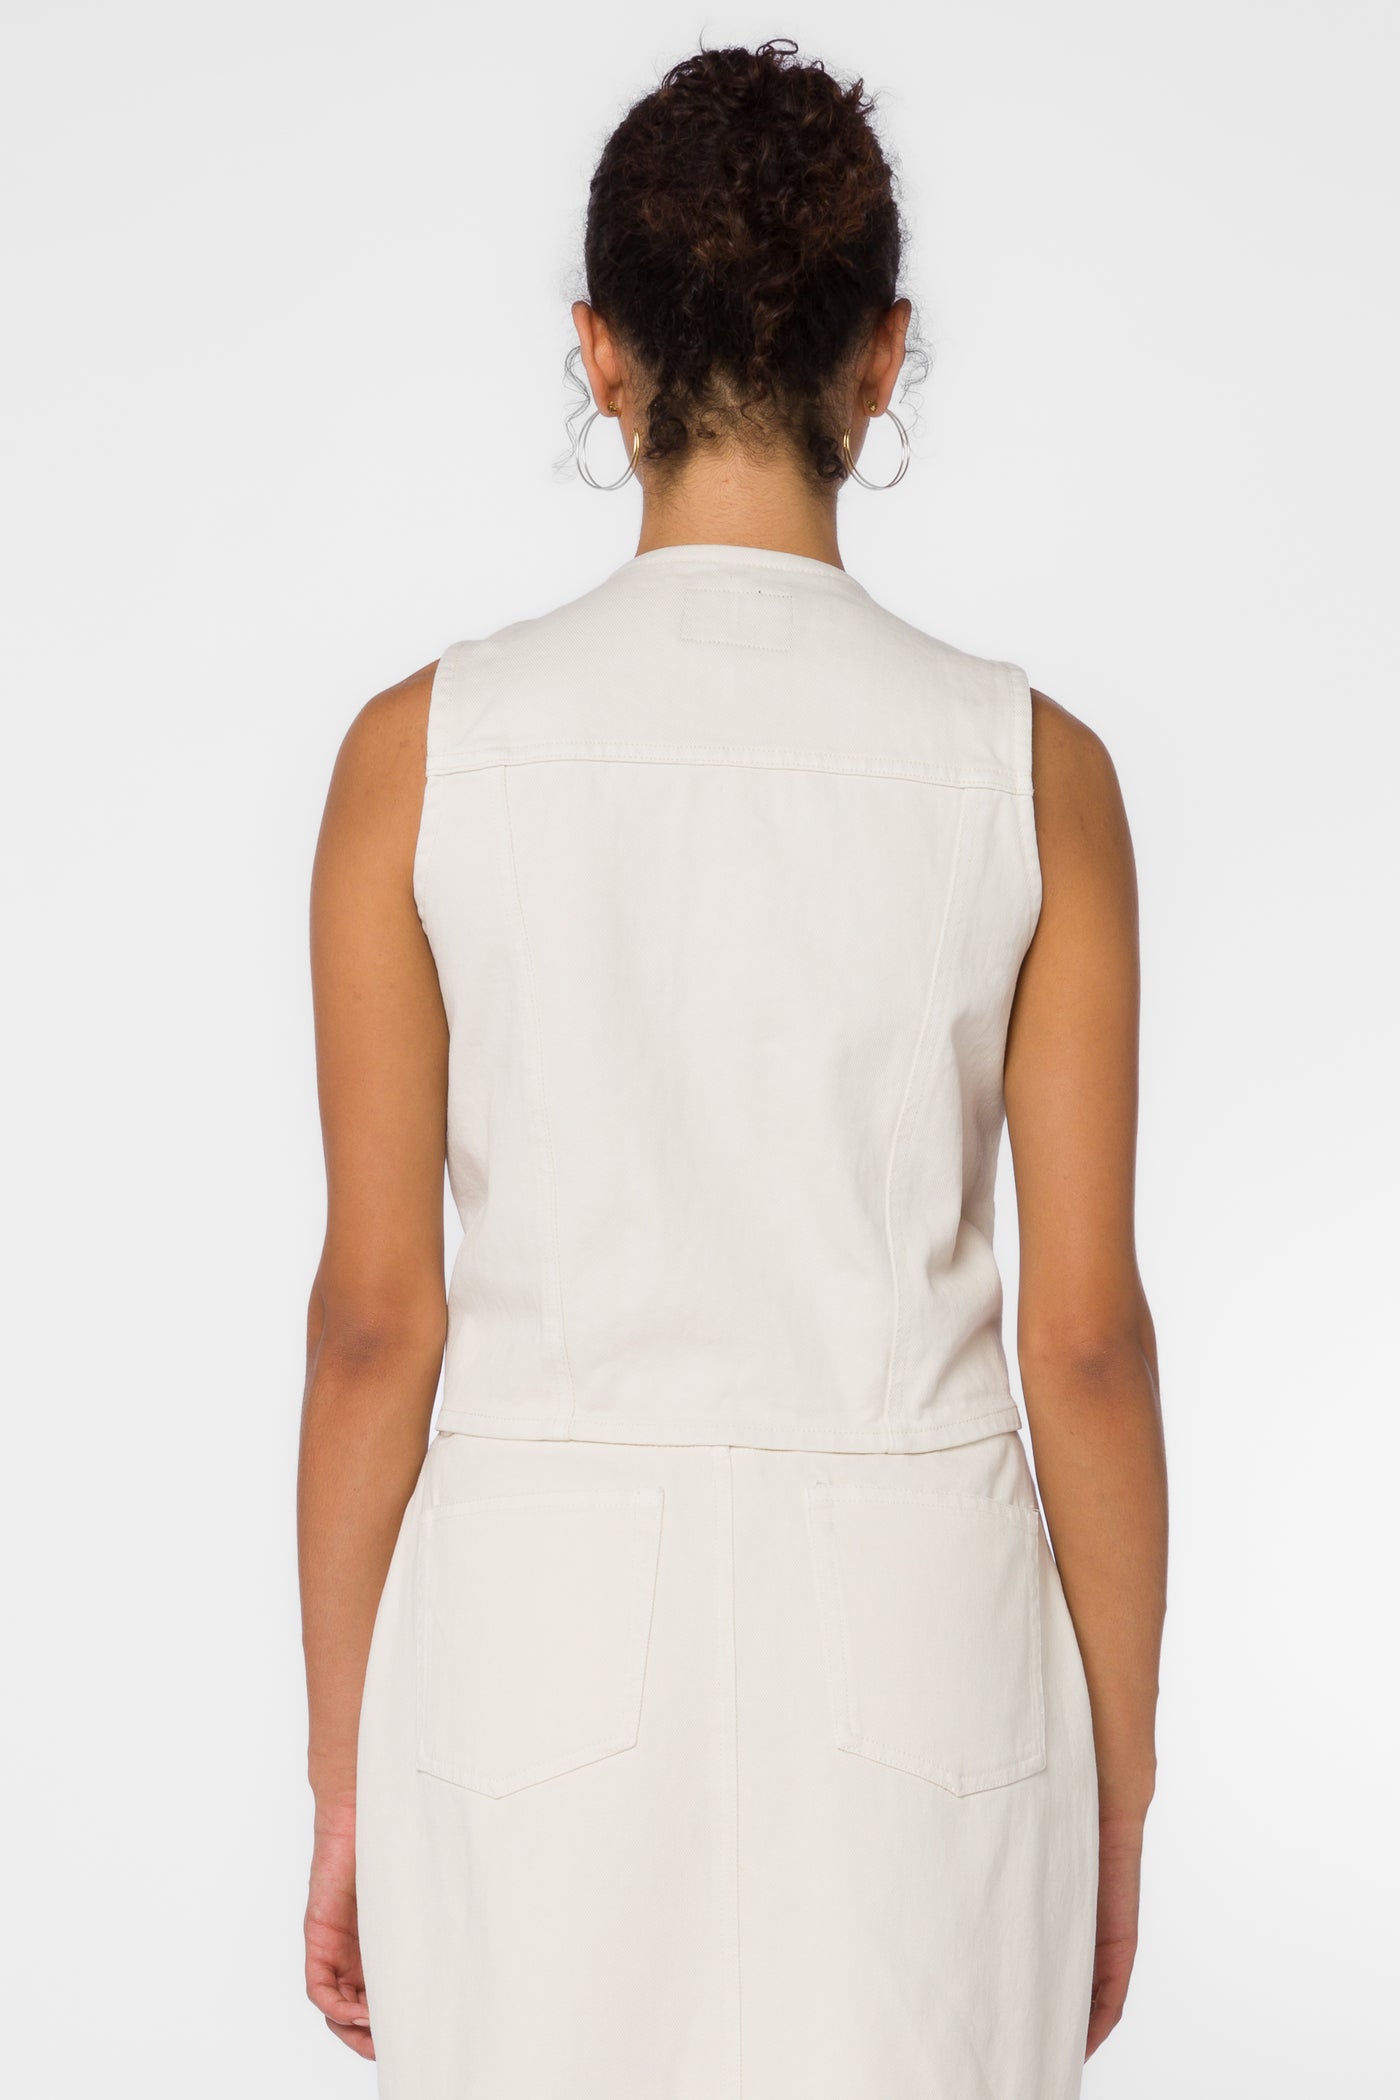 Kiana Ivory Vest - Jackets & Outerwear - Velvet Heart Clothing